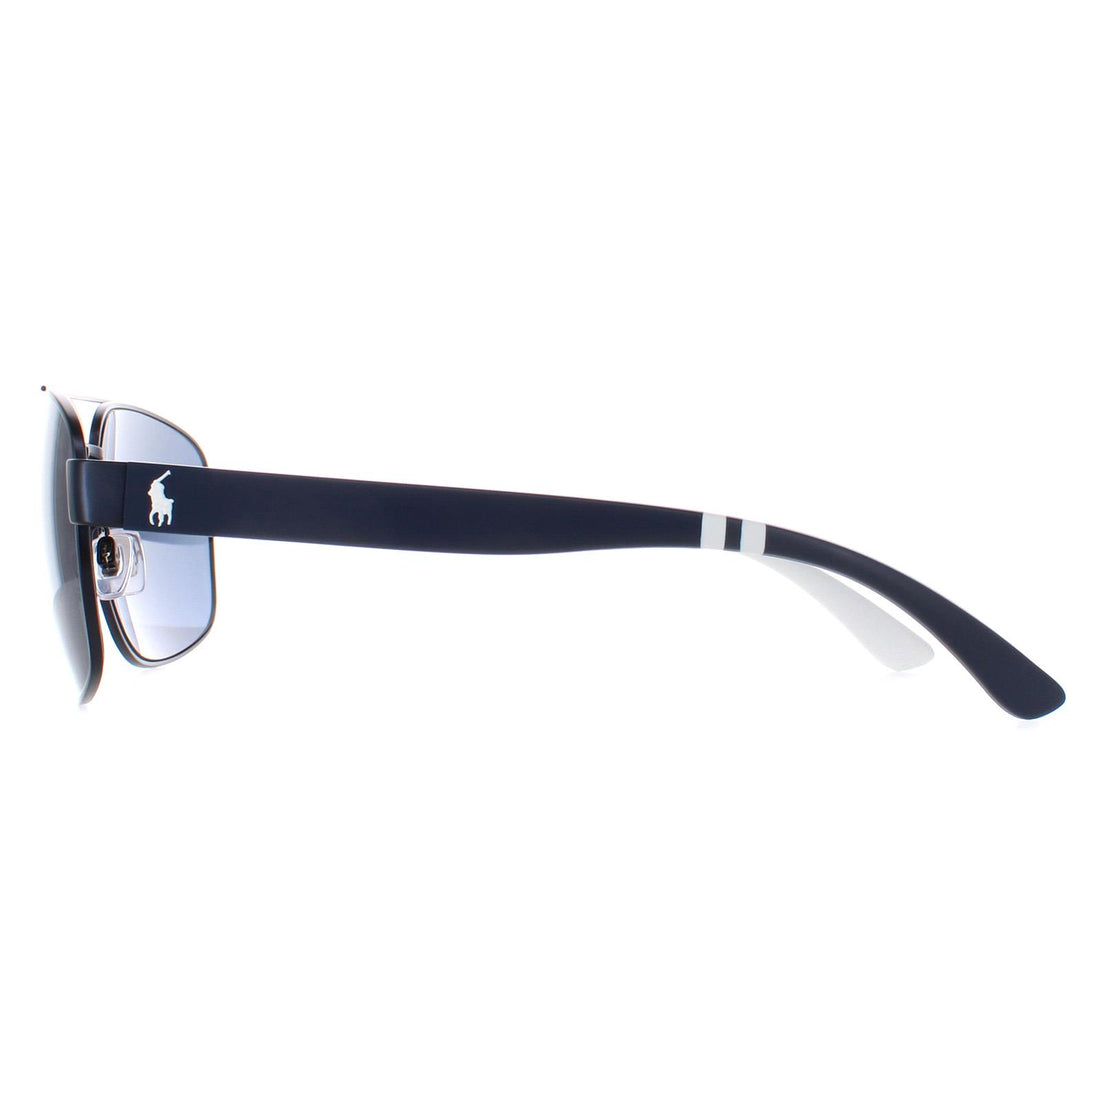 Polo Ralph Lauren PH3112 Sunglasses